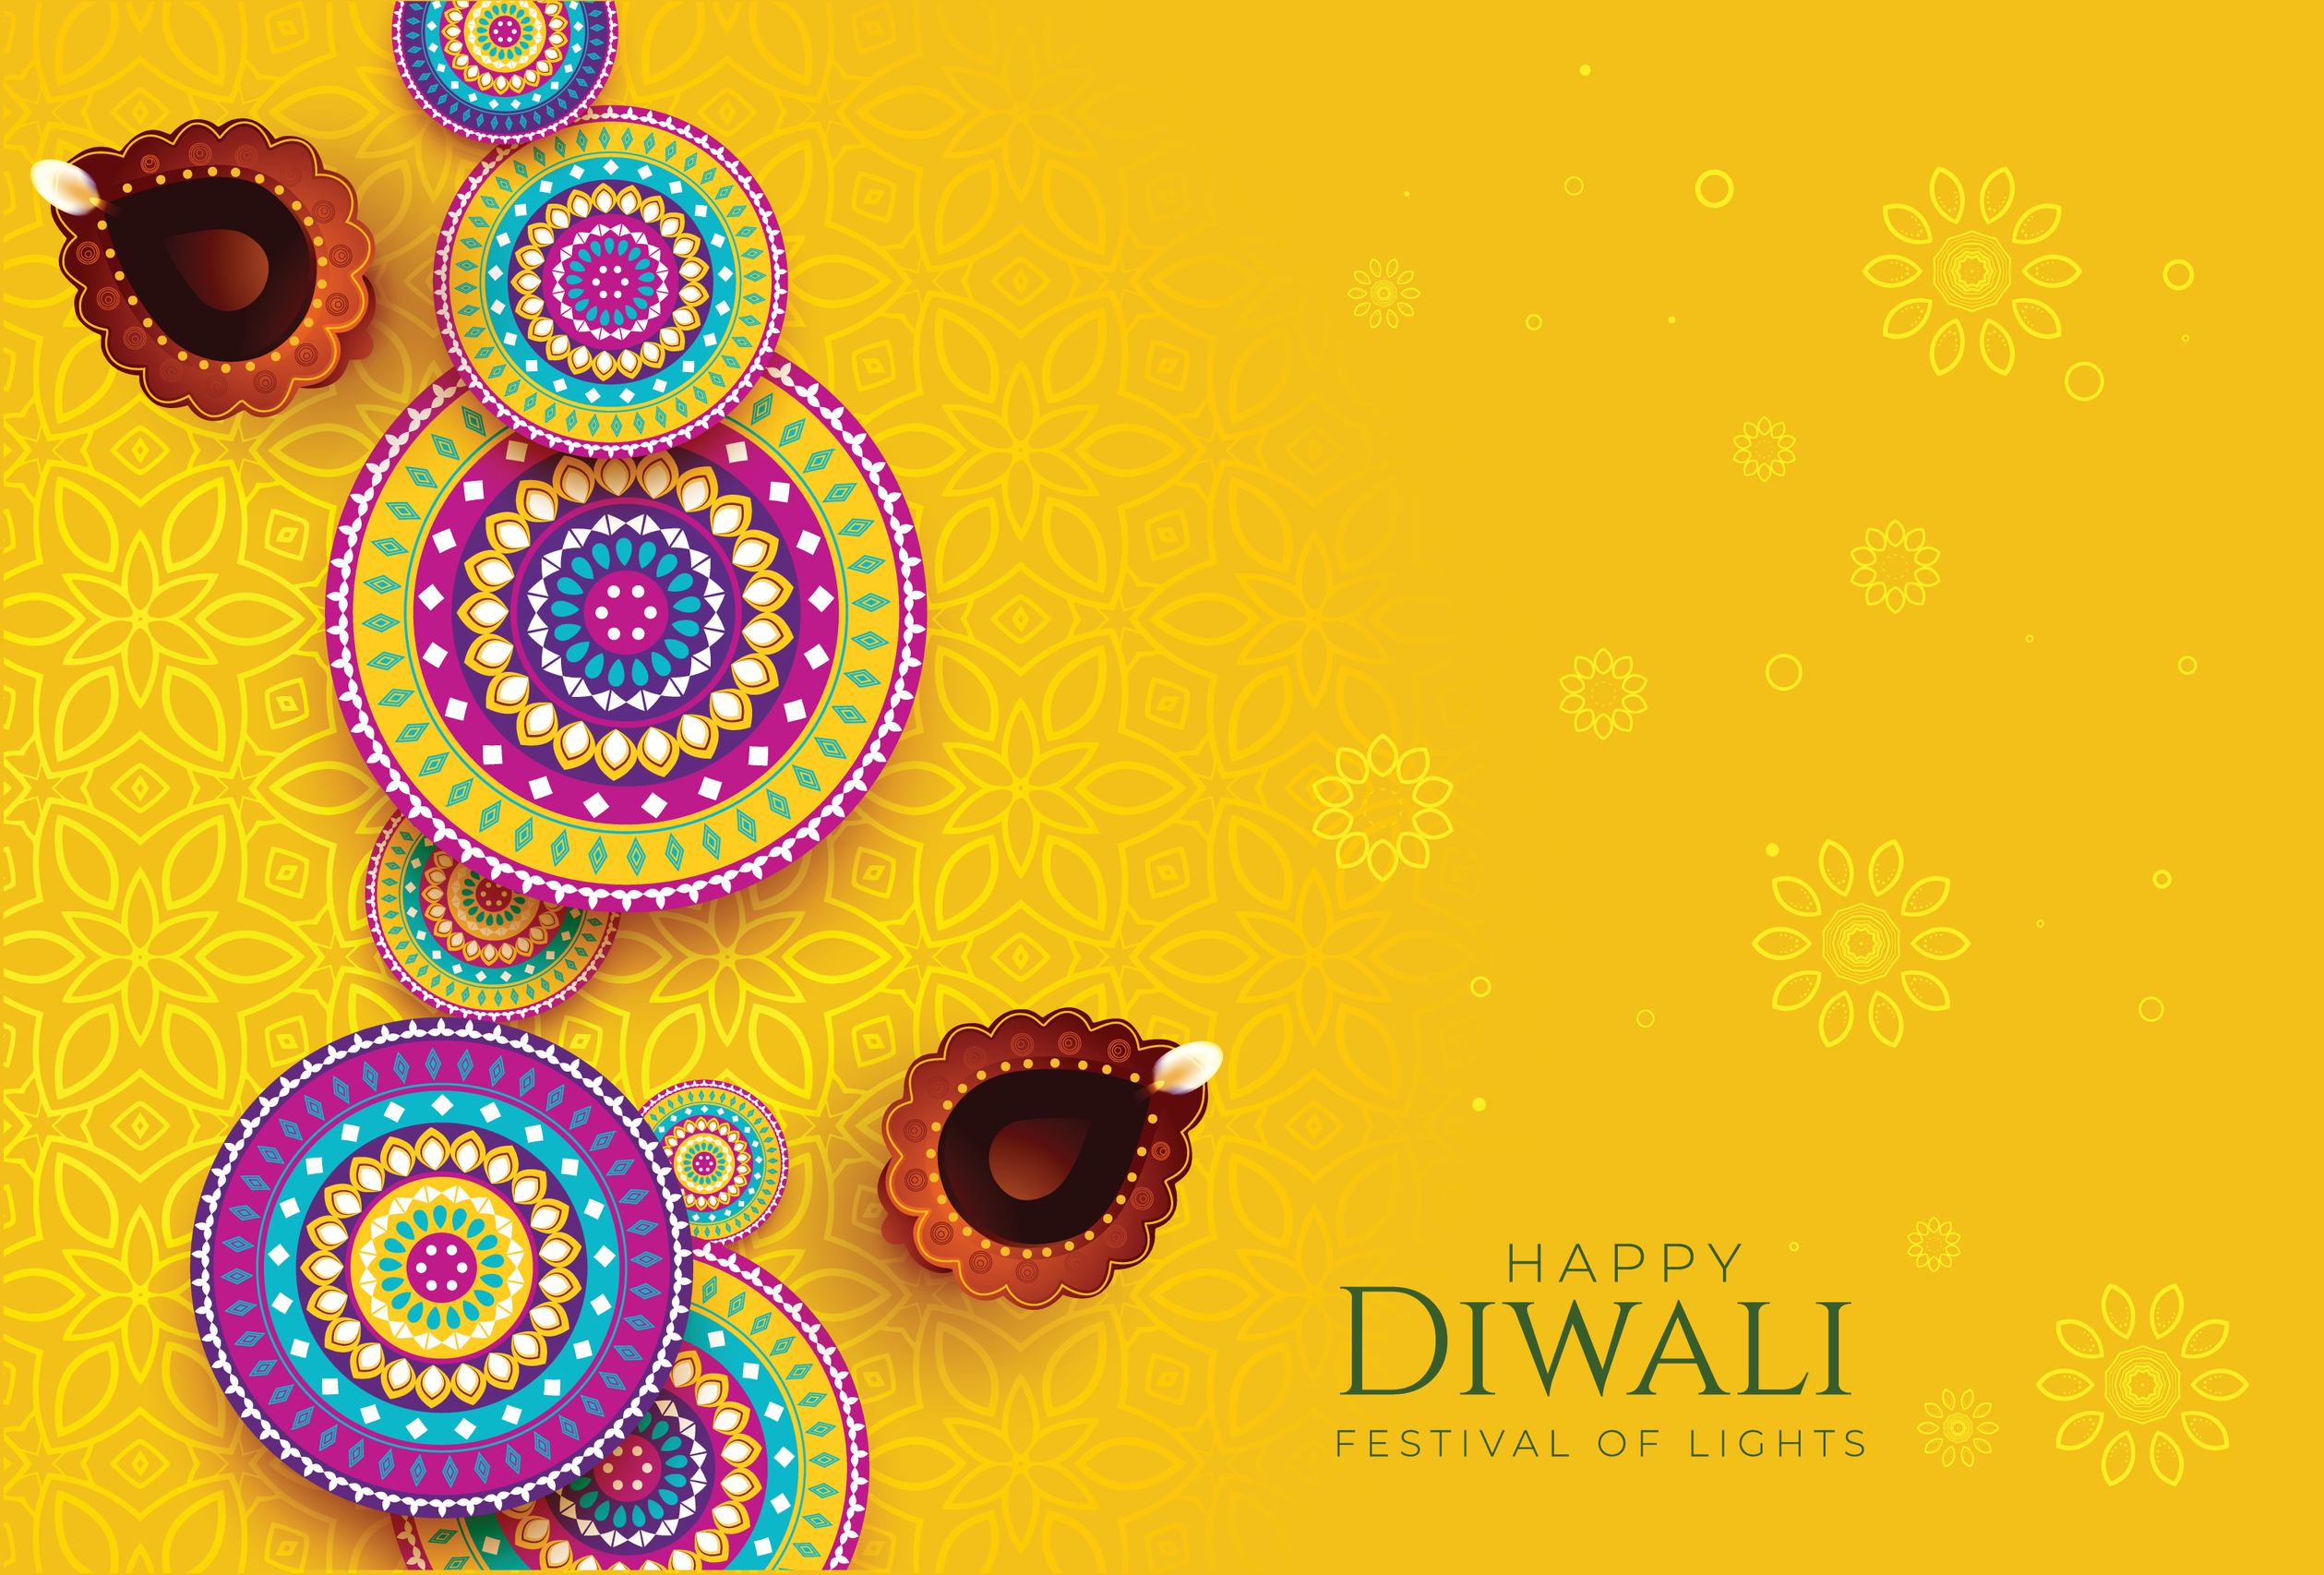 public/uploads/2020/09/Online-Diwali-Shopping-Tips-That-Can-Make-Your-LIfe-Earlier.jpg